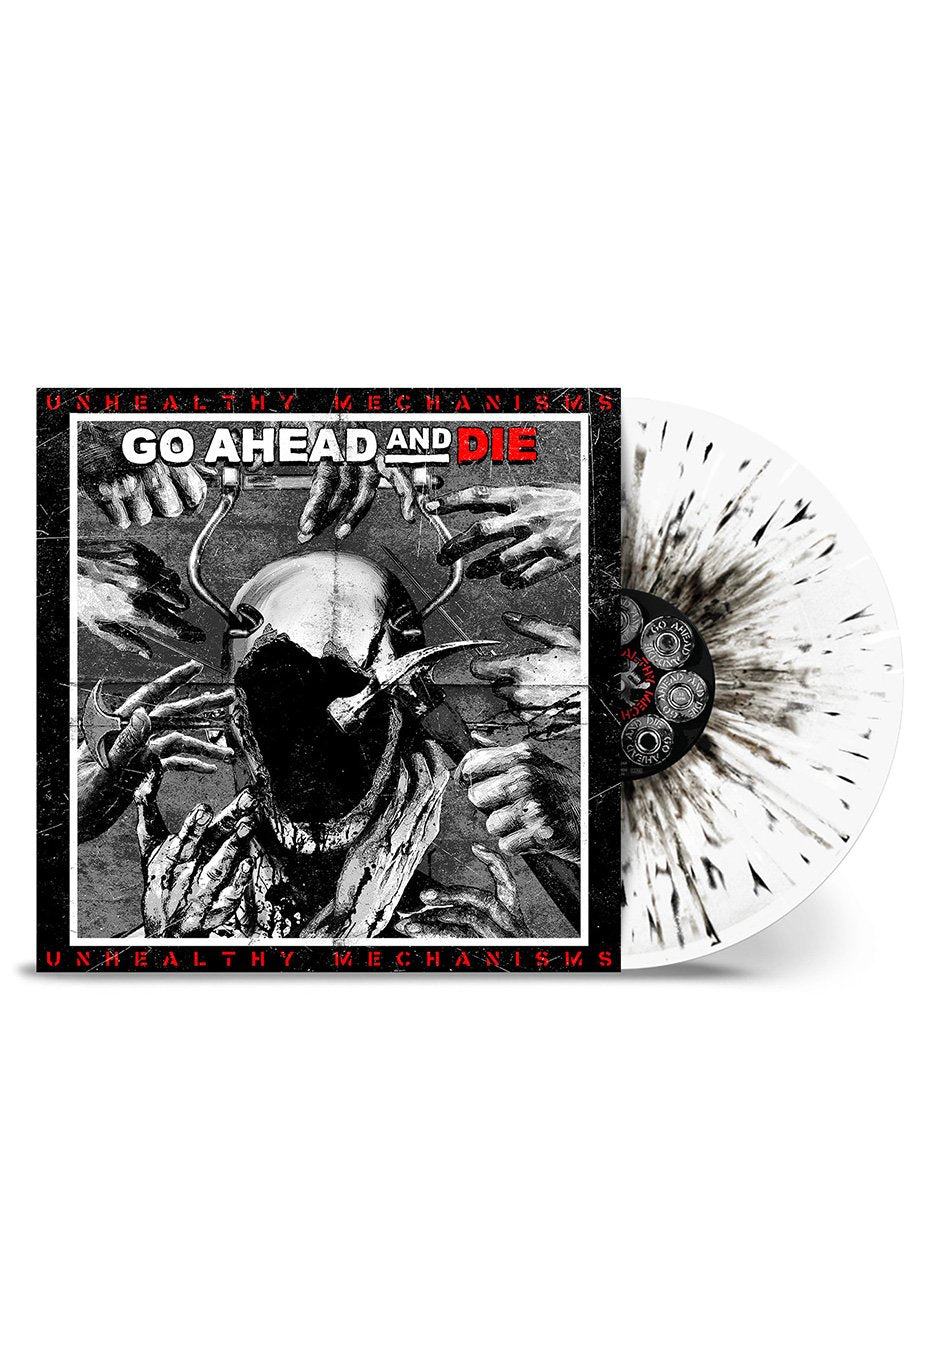 Go Ahead And Die - Unhealthy Mechanisms Ltd. White w/ Black - Splattered Vinyl